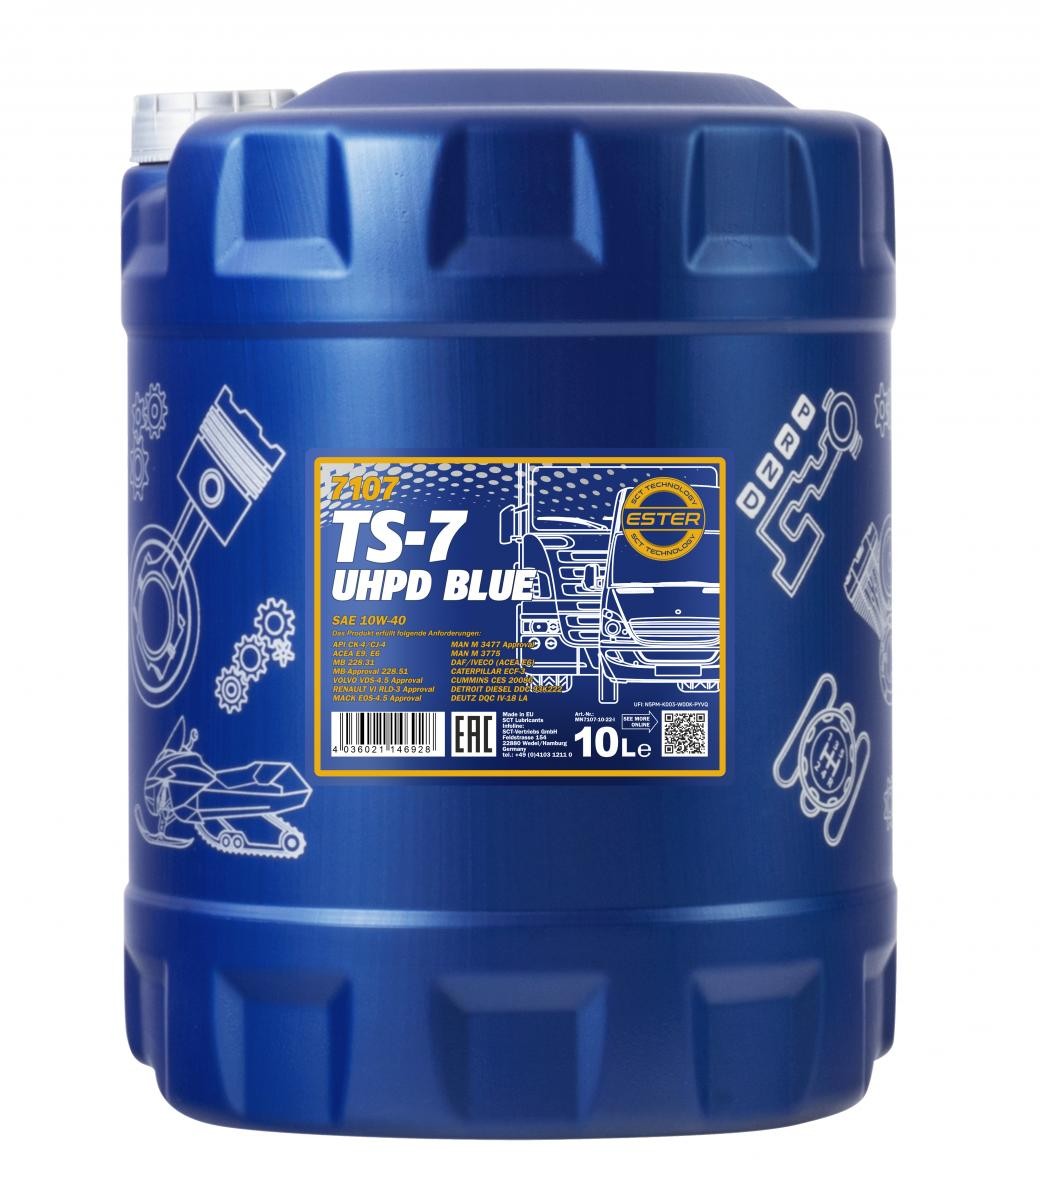 Aceite de motor para coche 10W-40 longlife gasolina - MN7107-10 MANNOL TS-7, UHPD Blue